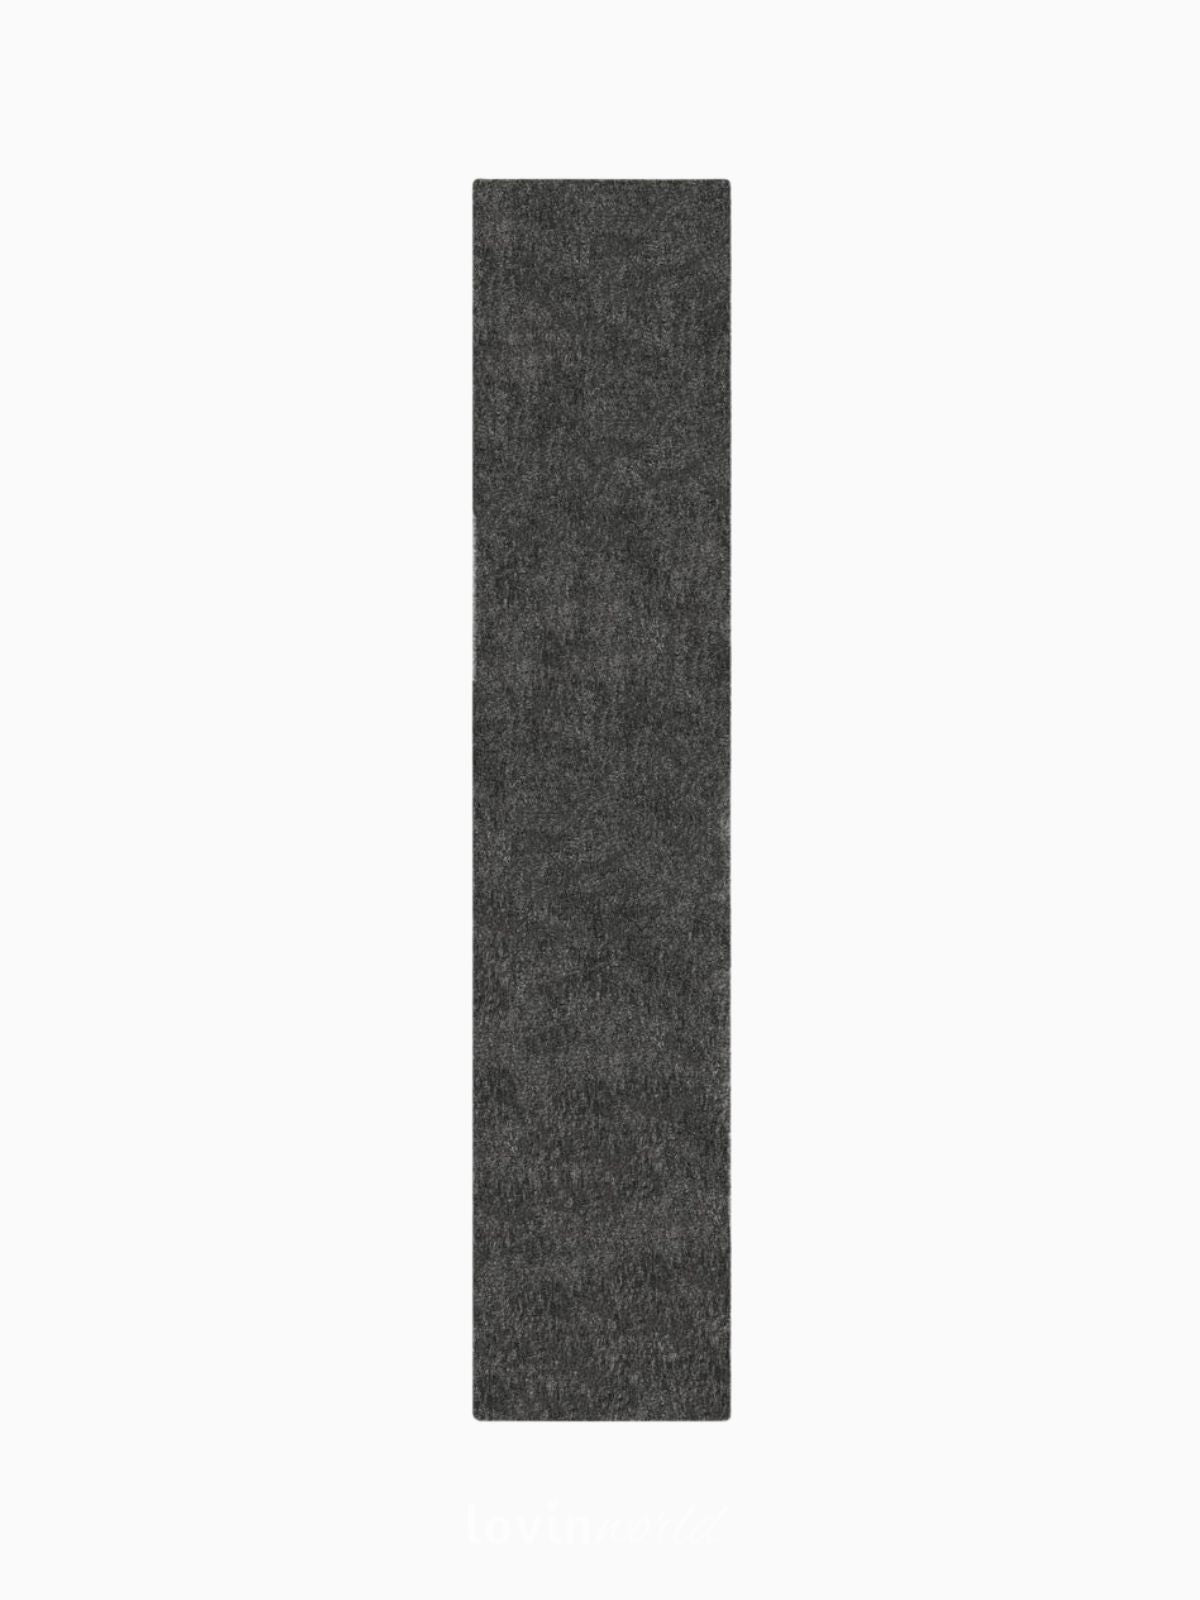 Runner shaggy Velvet in poliestere, colore grigio 60x230 cm.-1